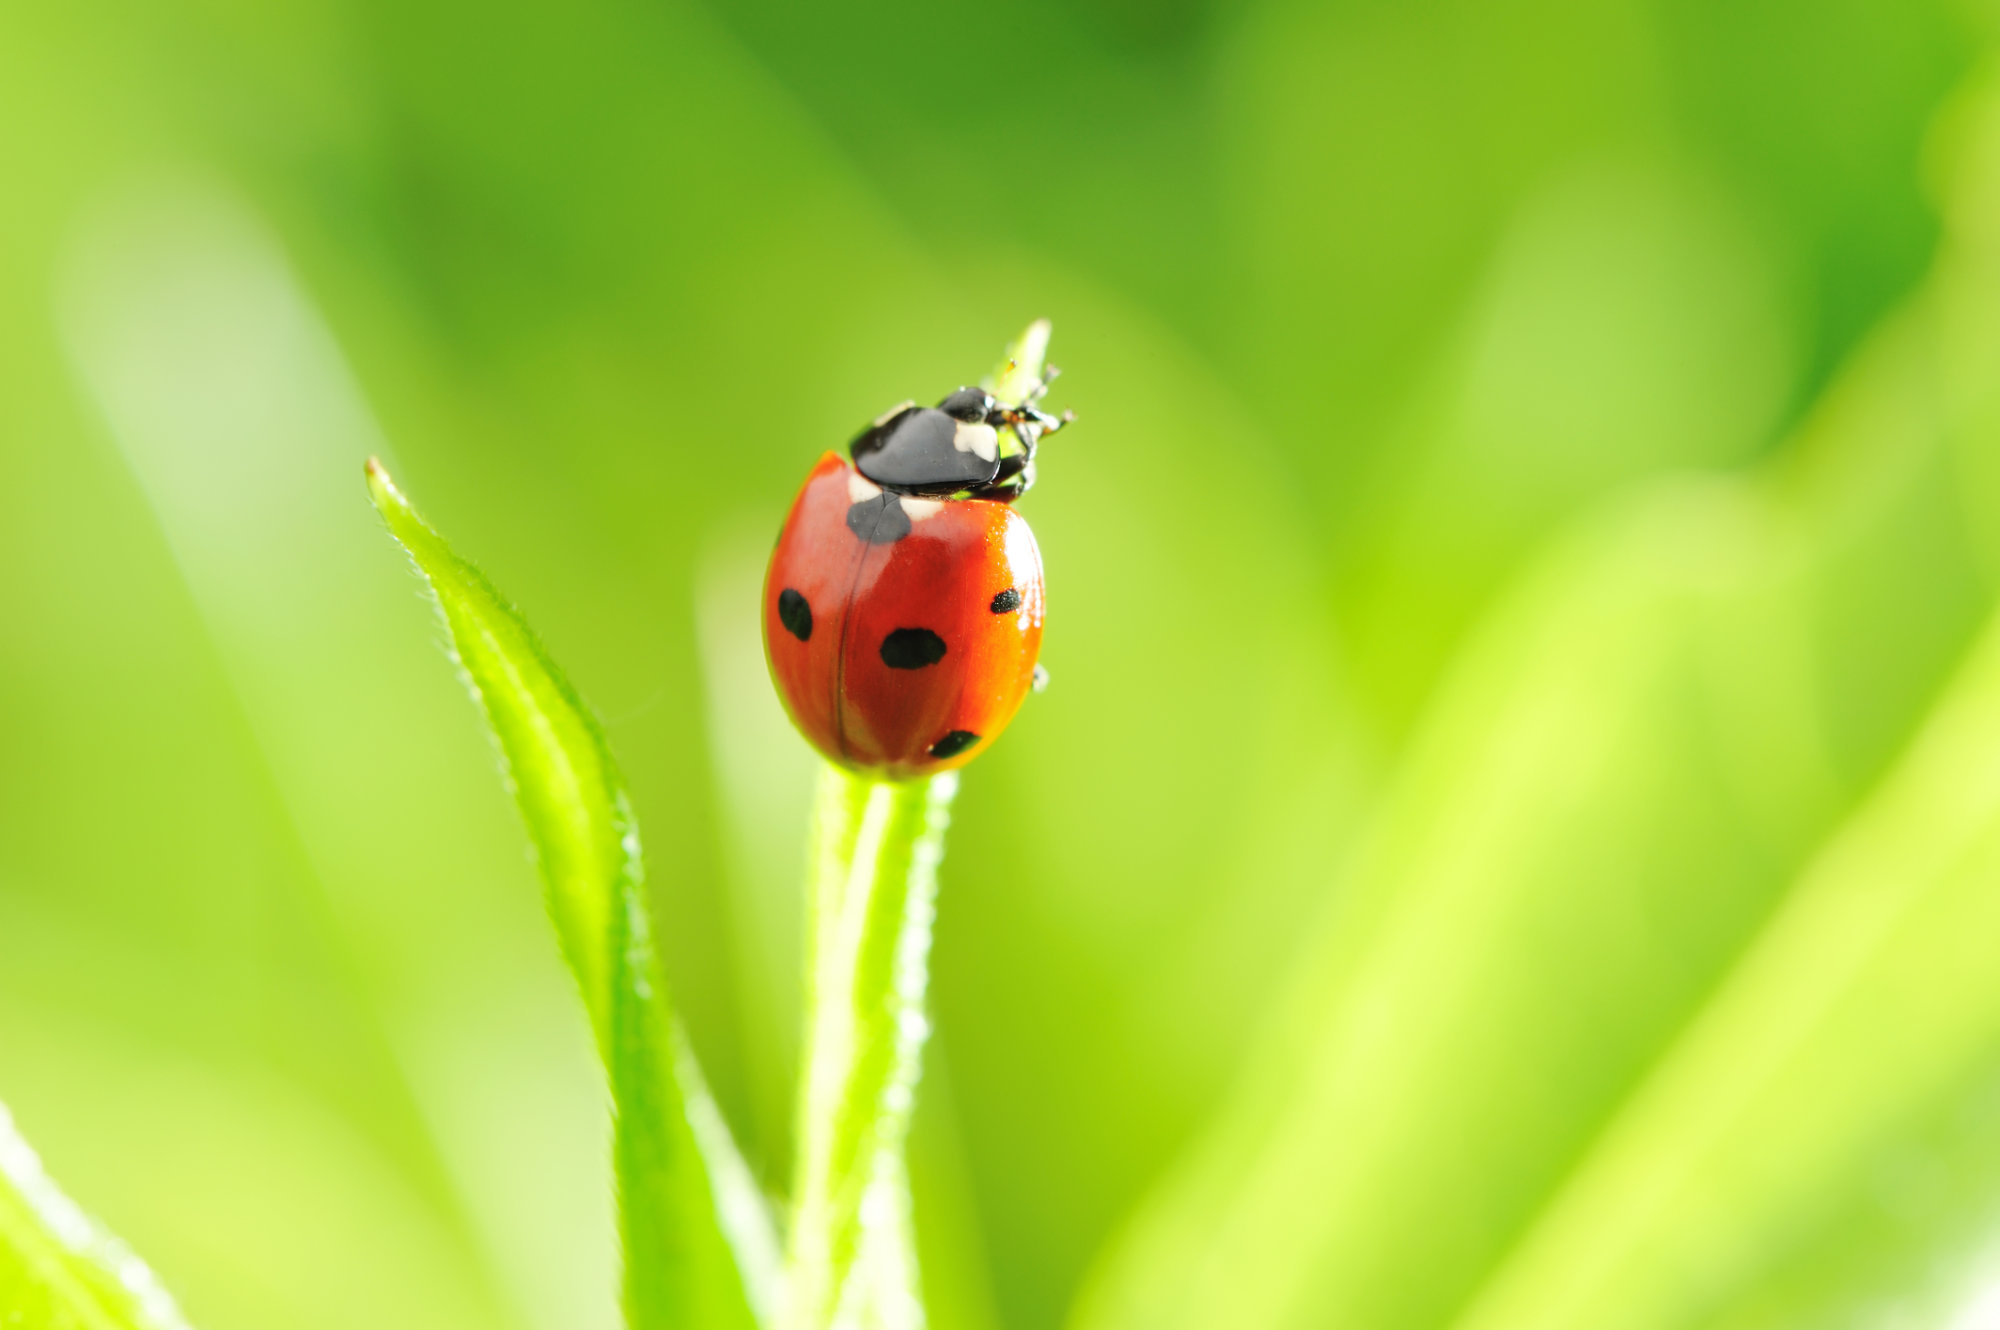 Ladybug on a grass with shallow DOF